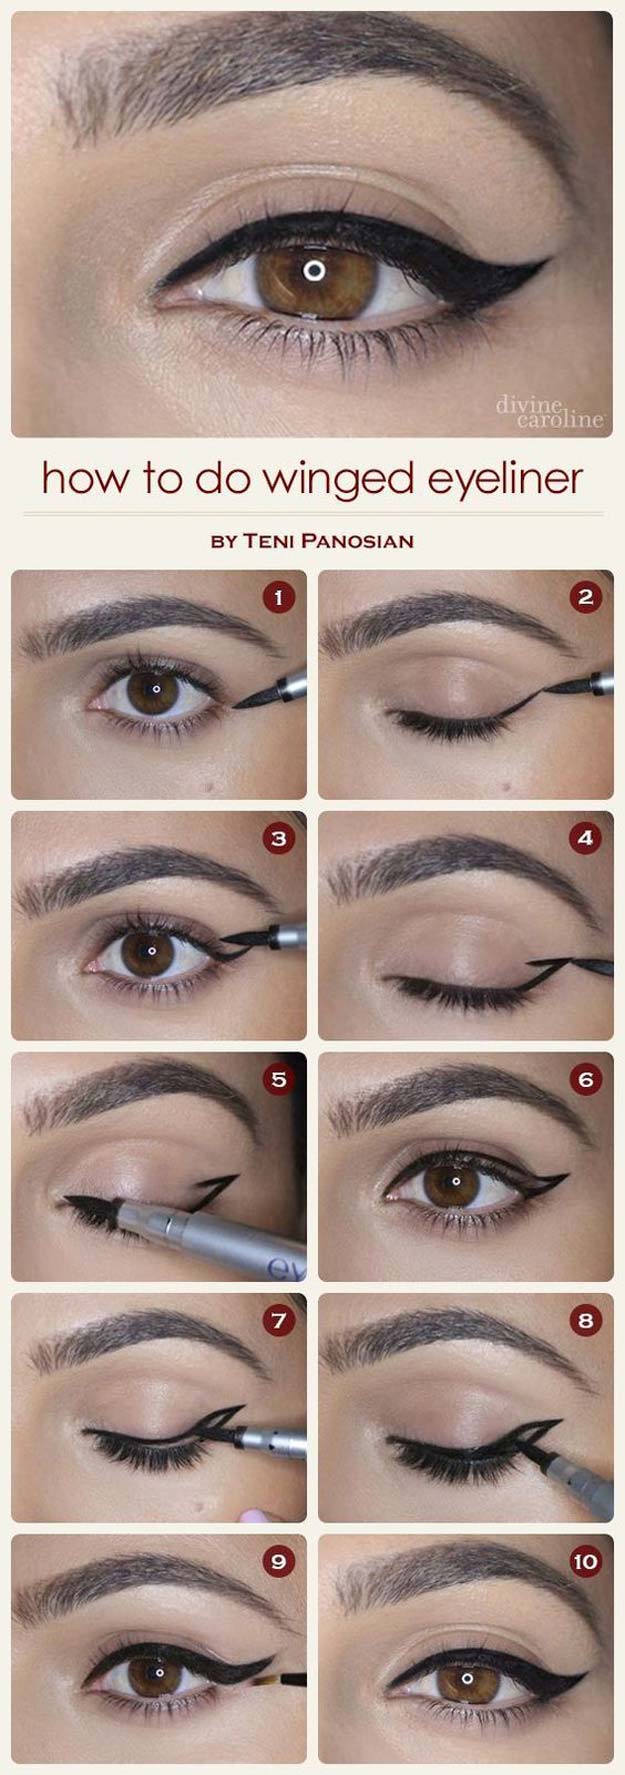 winged-eyeliner-tutorials-how-to-do-winged-eyeliner-like-a-boss-beauty-blogger